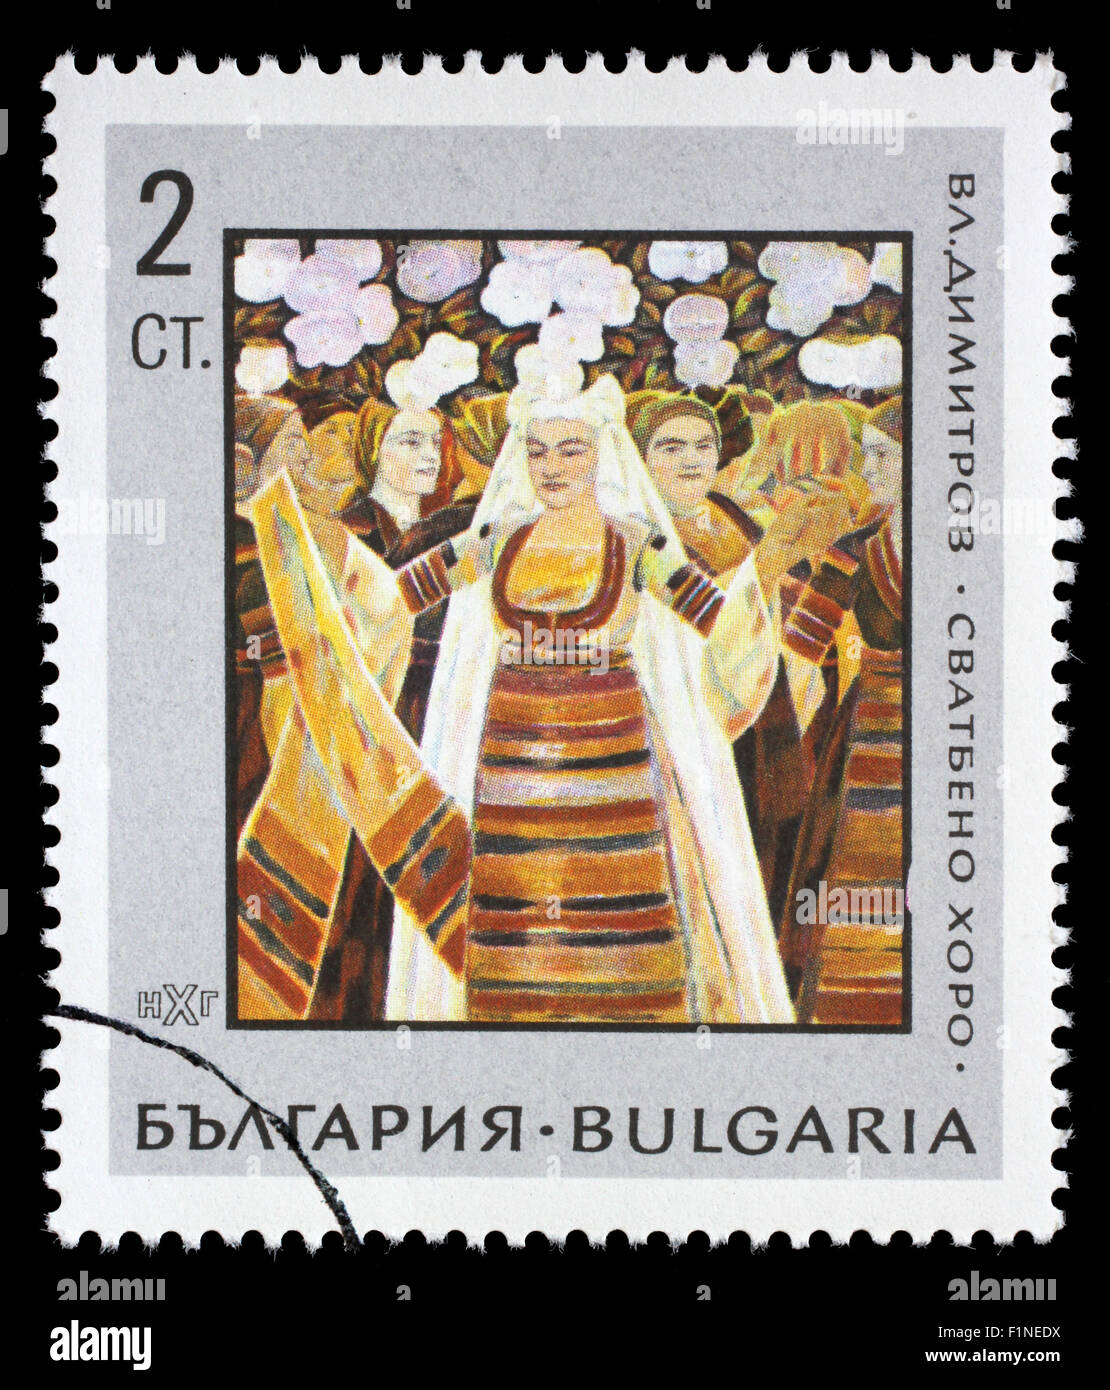 Stamp printed in Bulgaria shows The wedding by Vladimir Dimitrov, circa 1967. Stock Photo